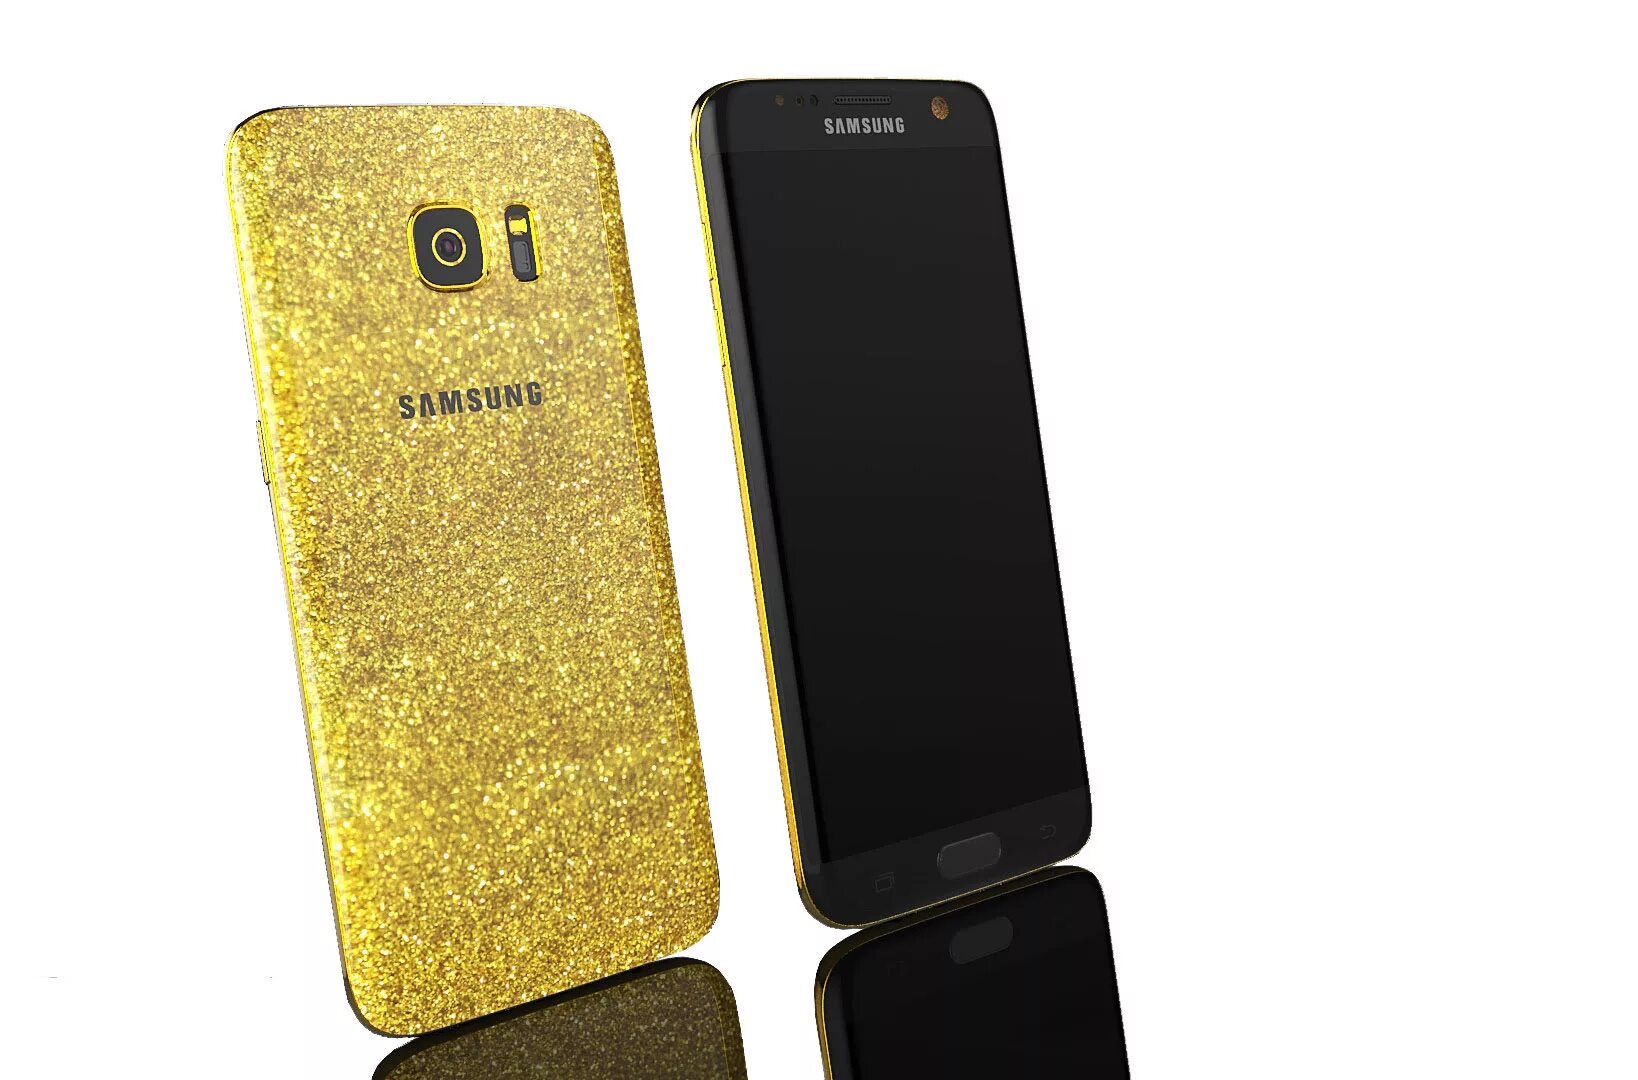 Samsung Gold. Galaxy s7 золотой. Самсунг золотистый смартфон. Самсунг золотого цвета а8.